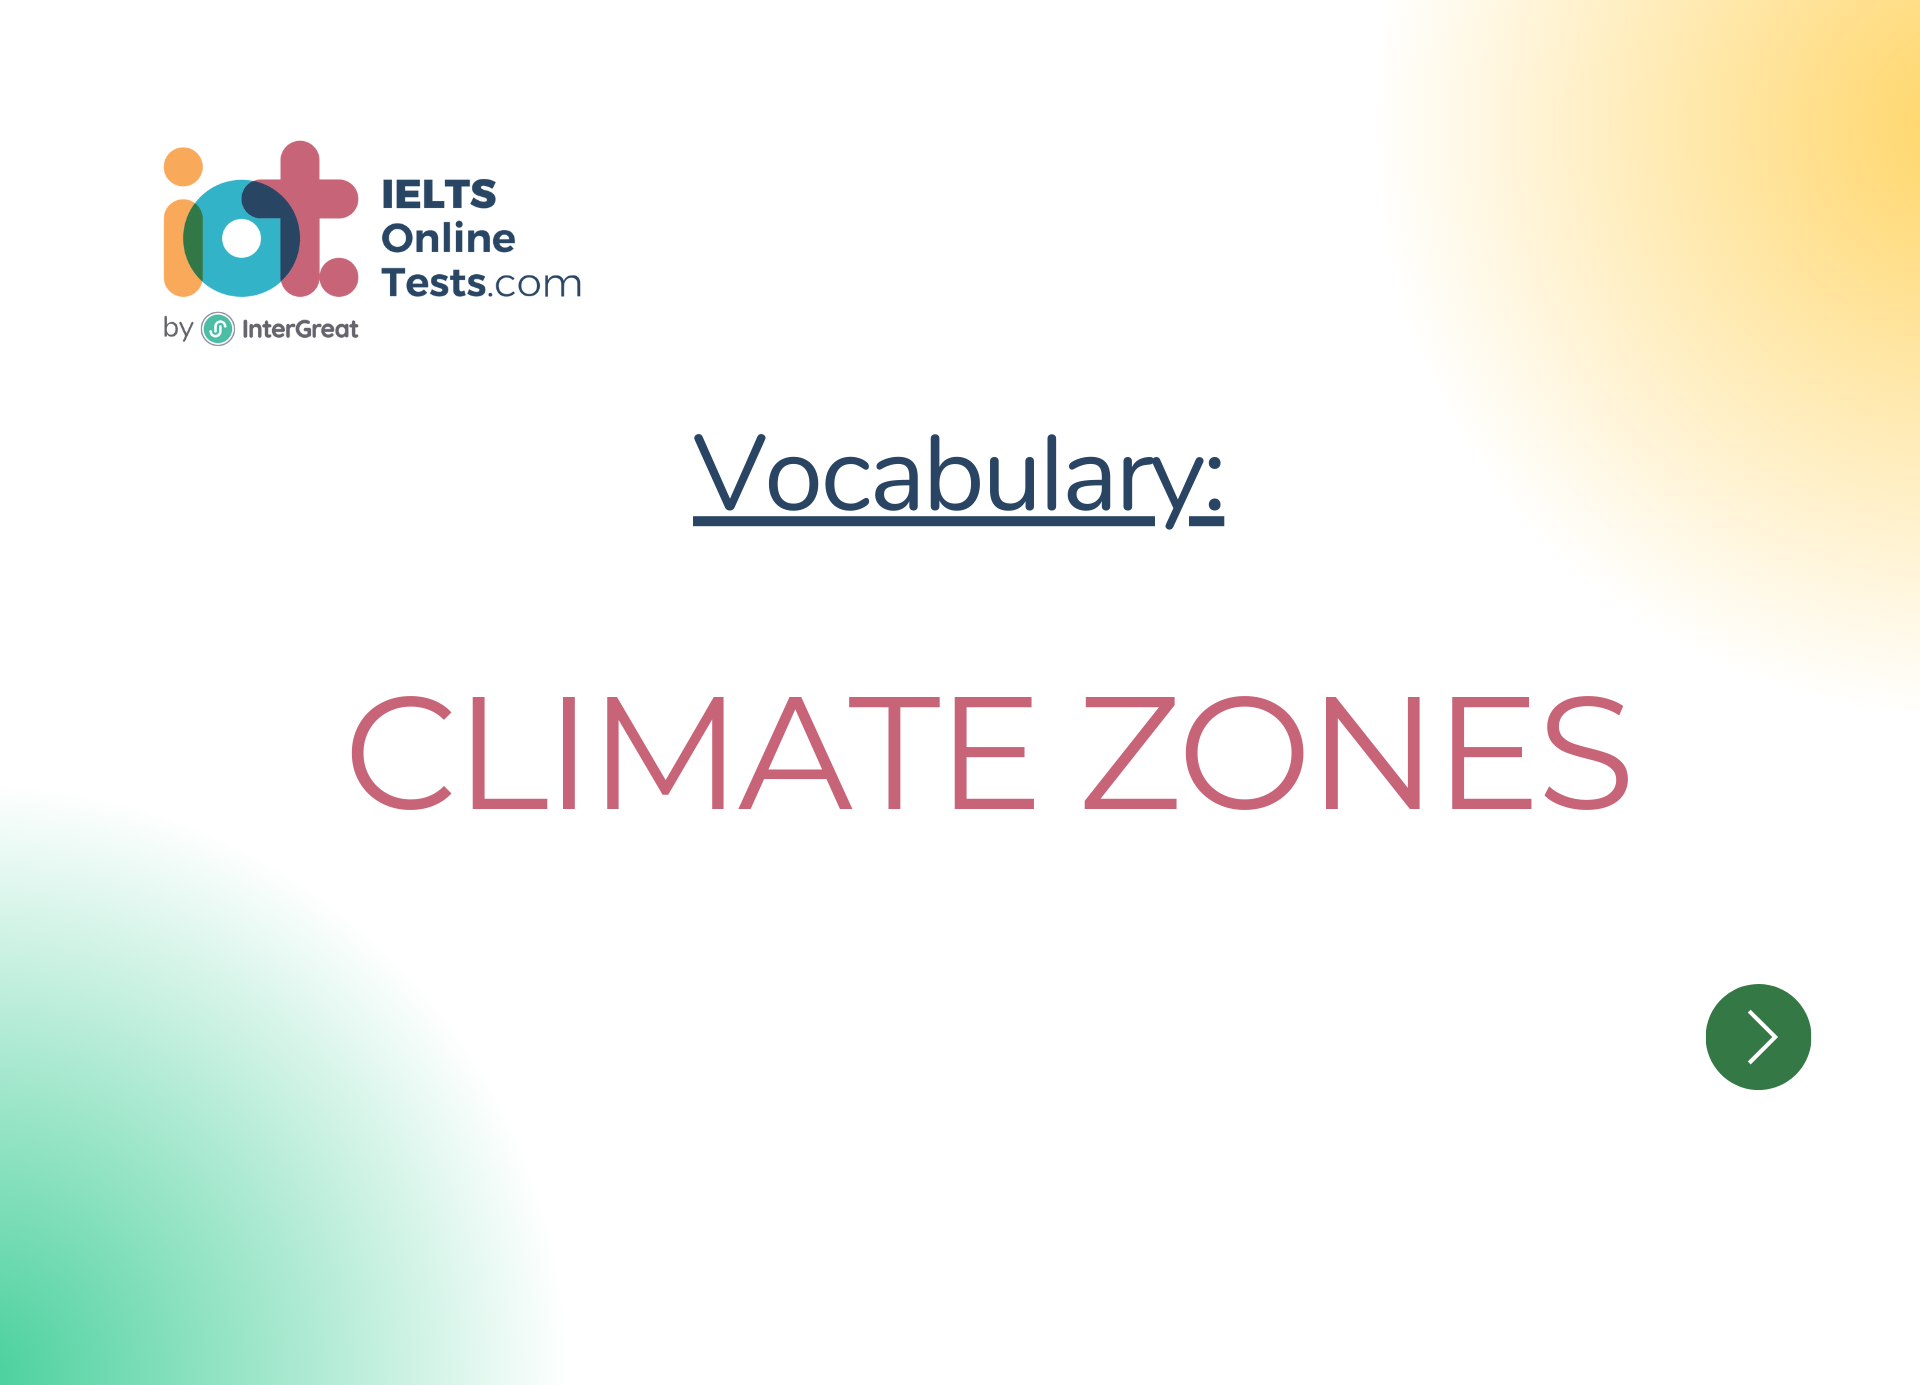 Climate zones